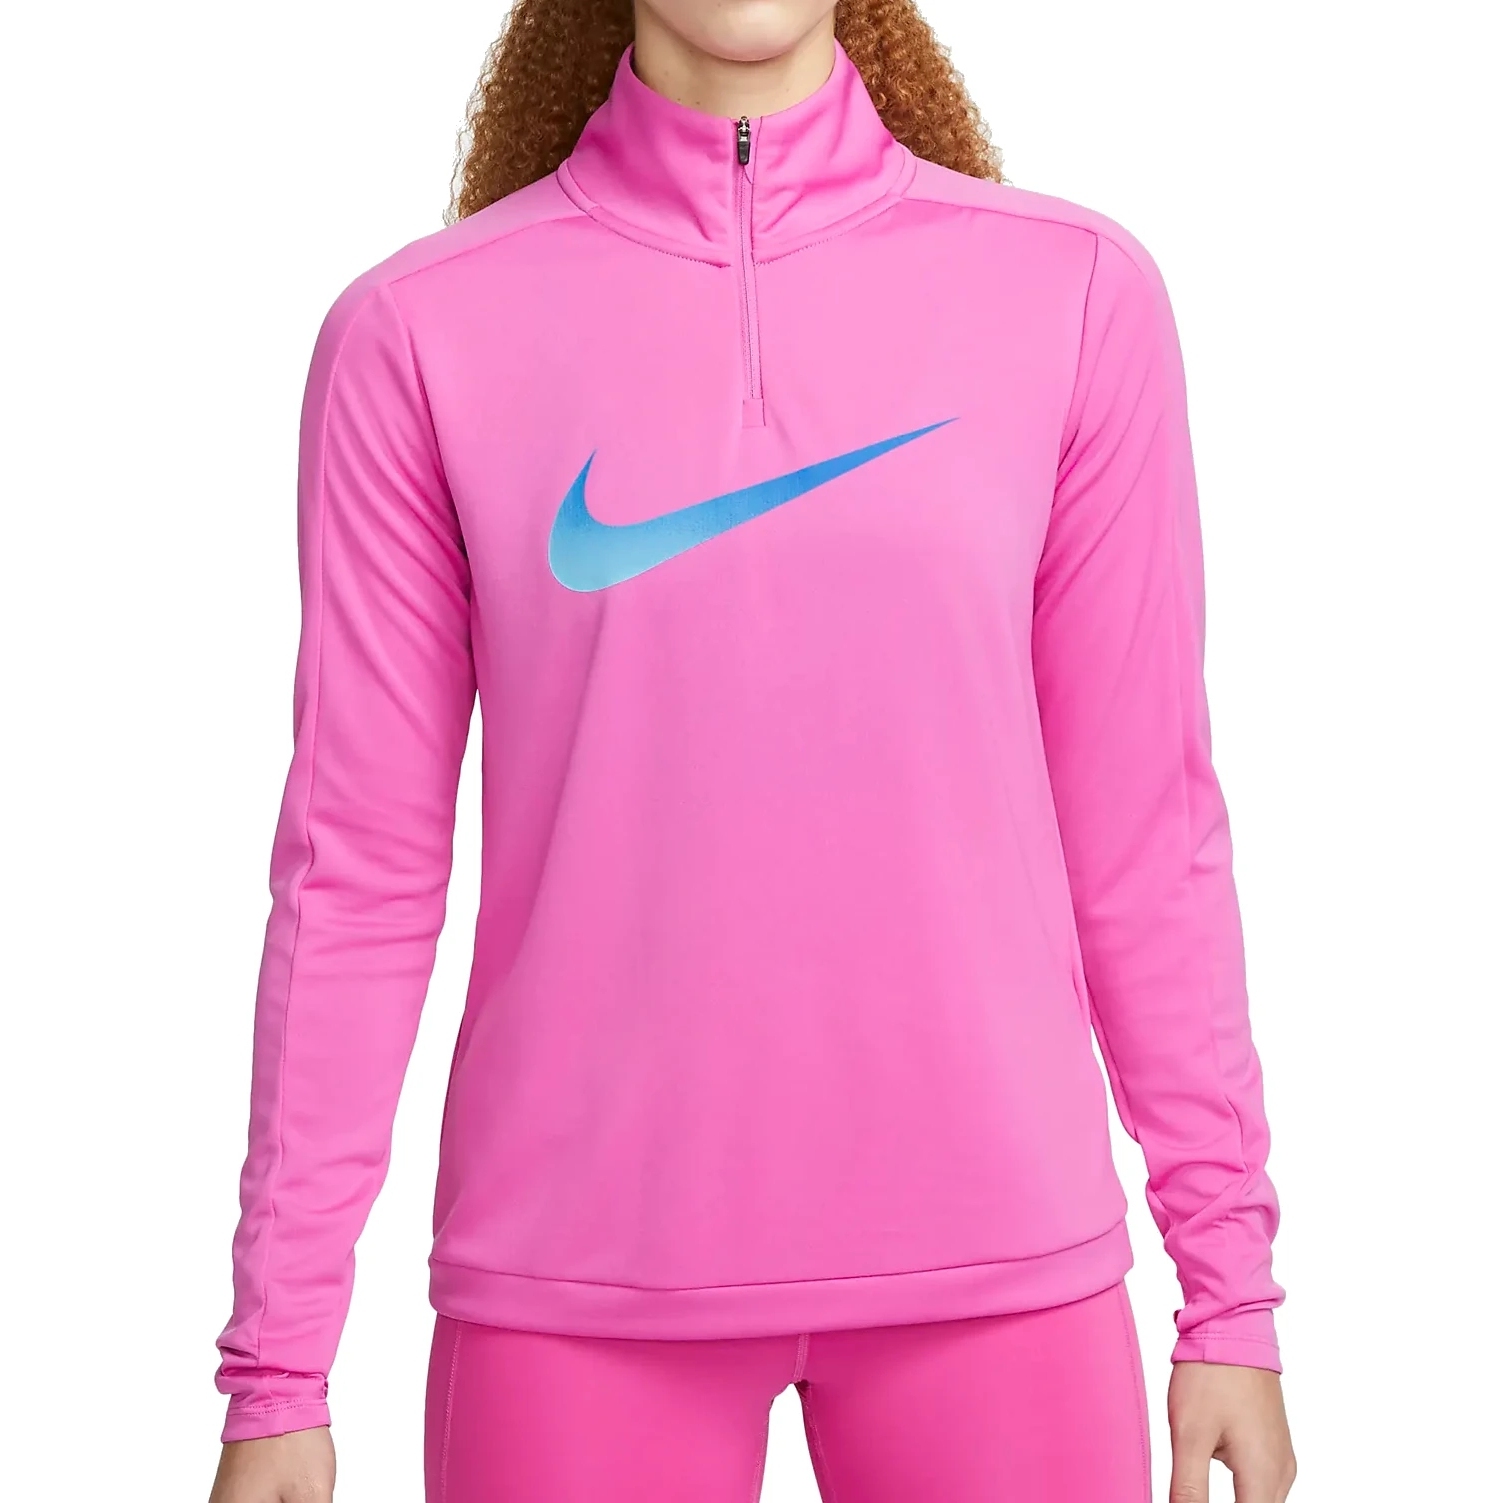 Nike Dri-FIT Sleeve fuchsia/reflective Short DX0952-623 - Zip active Women Long Top Swoosh silver